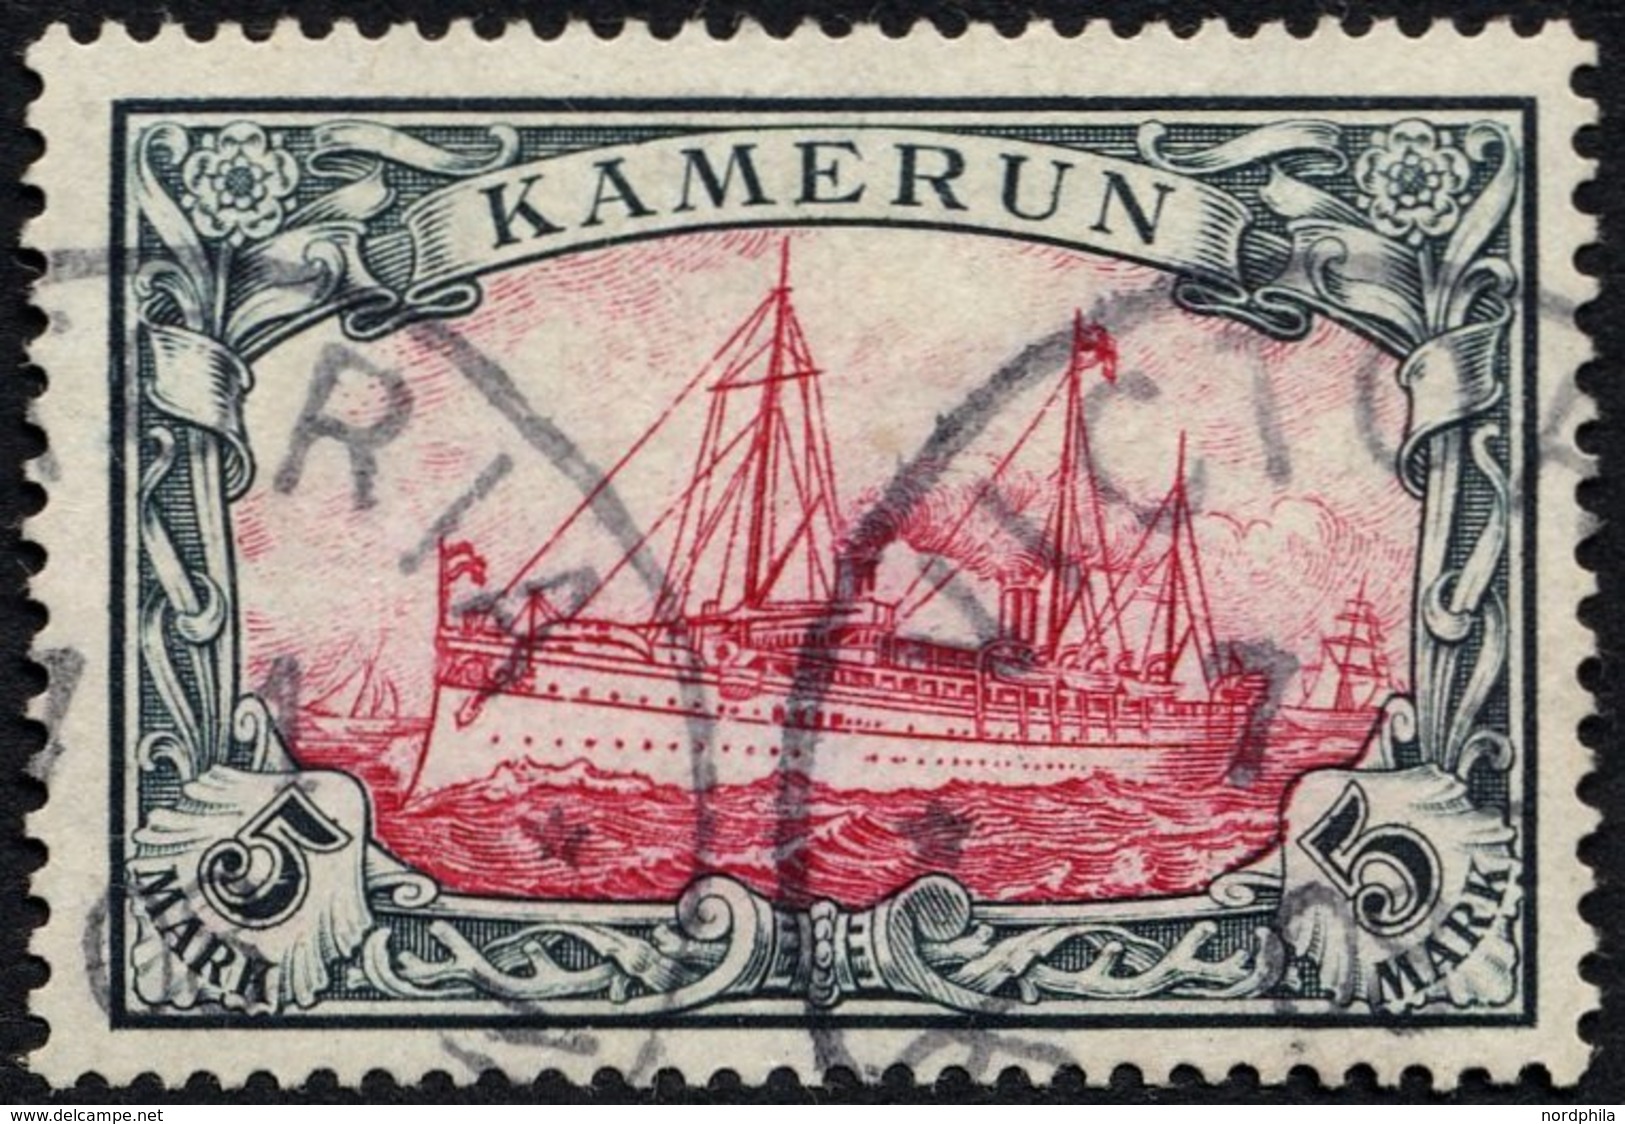 KAMERUN 19 O, 1900, 5 M. Grünschwarz/bräunlichkarmin, Ohne Wz., Stempel VICTORIA, Pracht, Signiert Senf, Mi. 600.- - Kameroen